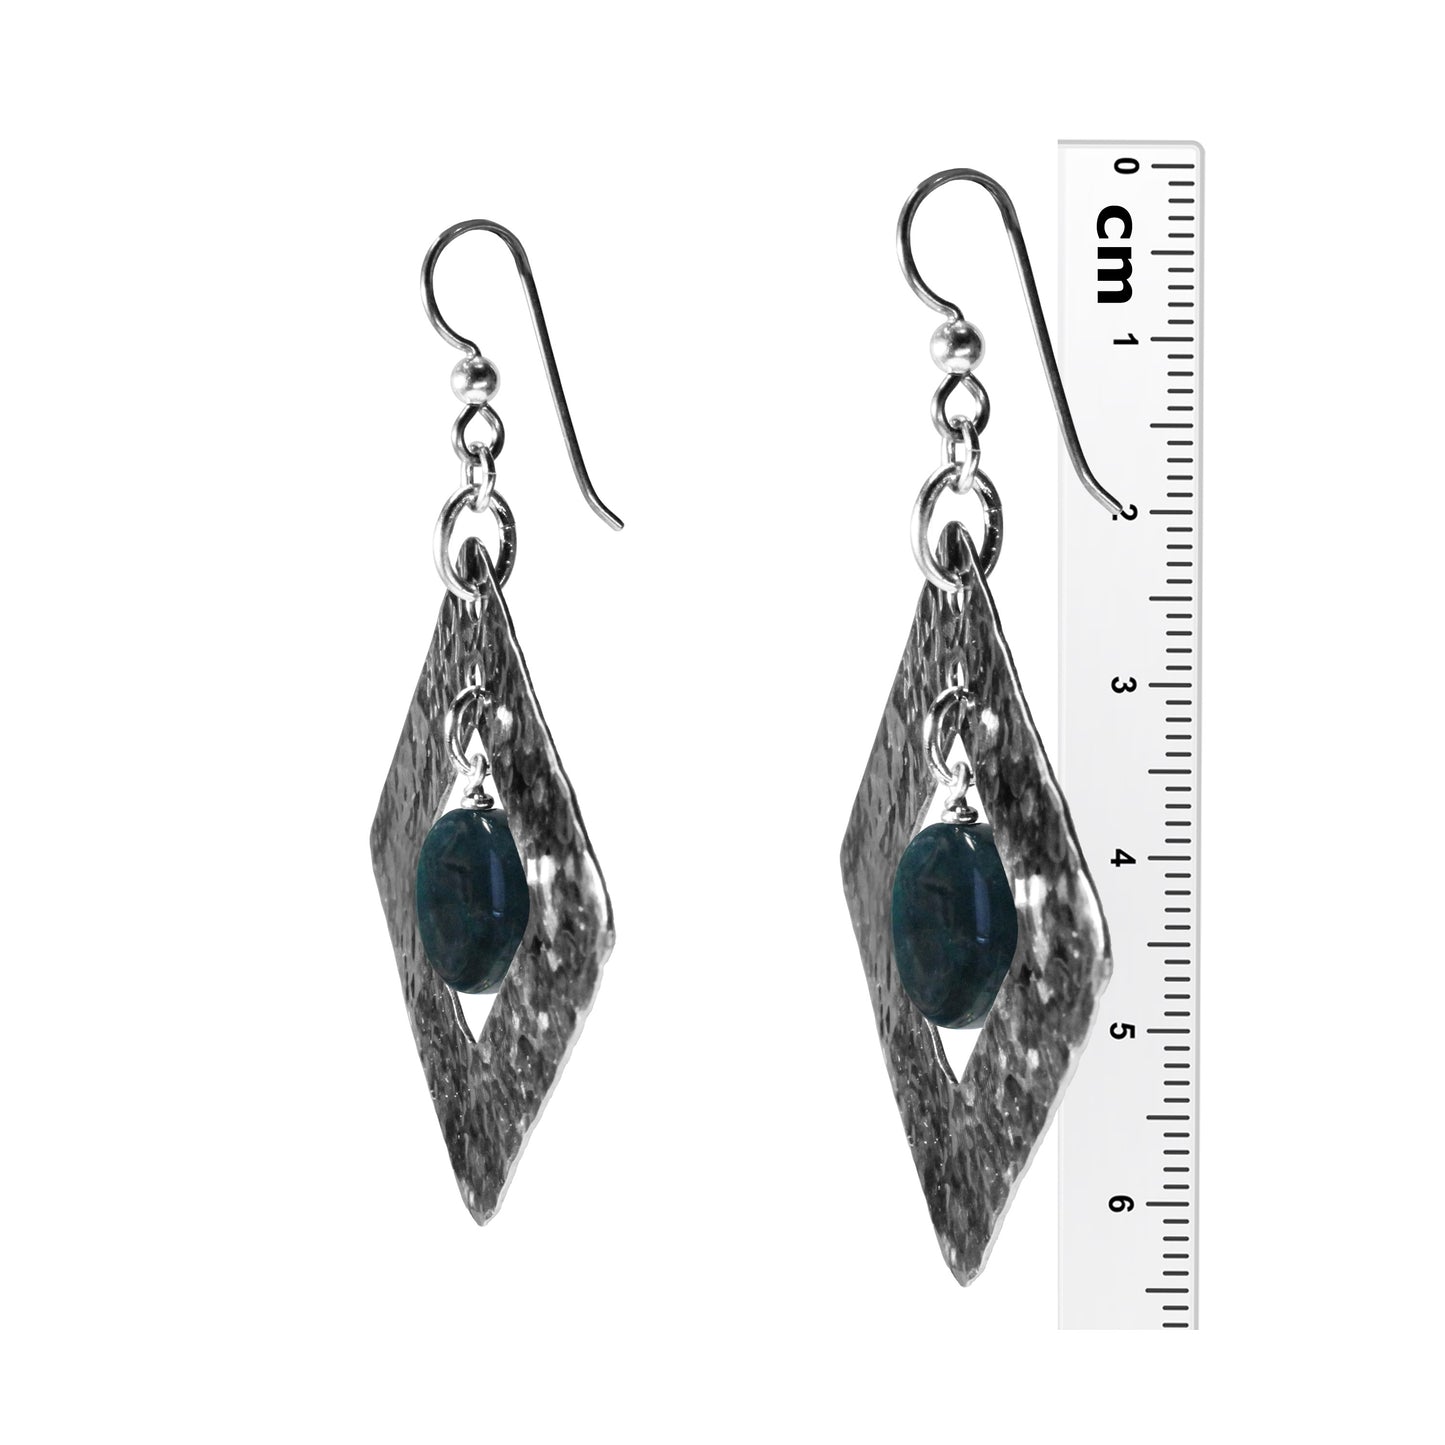 Hammered Steel Earrings with blue apatite / 65mm length / handmade geometric diamond-shaped / hypo-allergenic niobium earwires